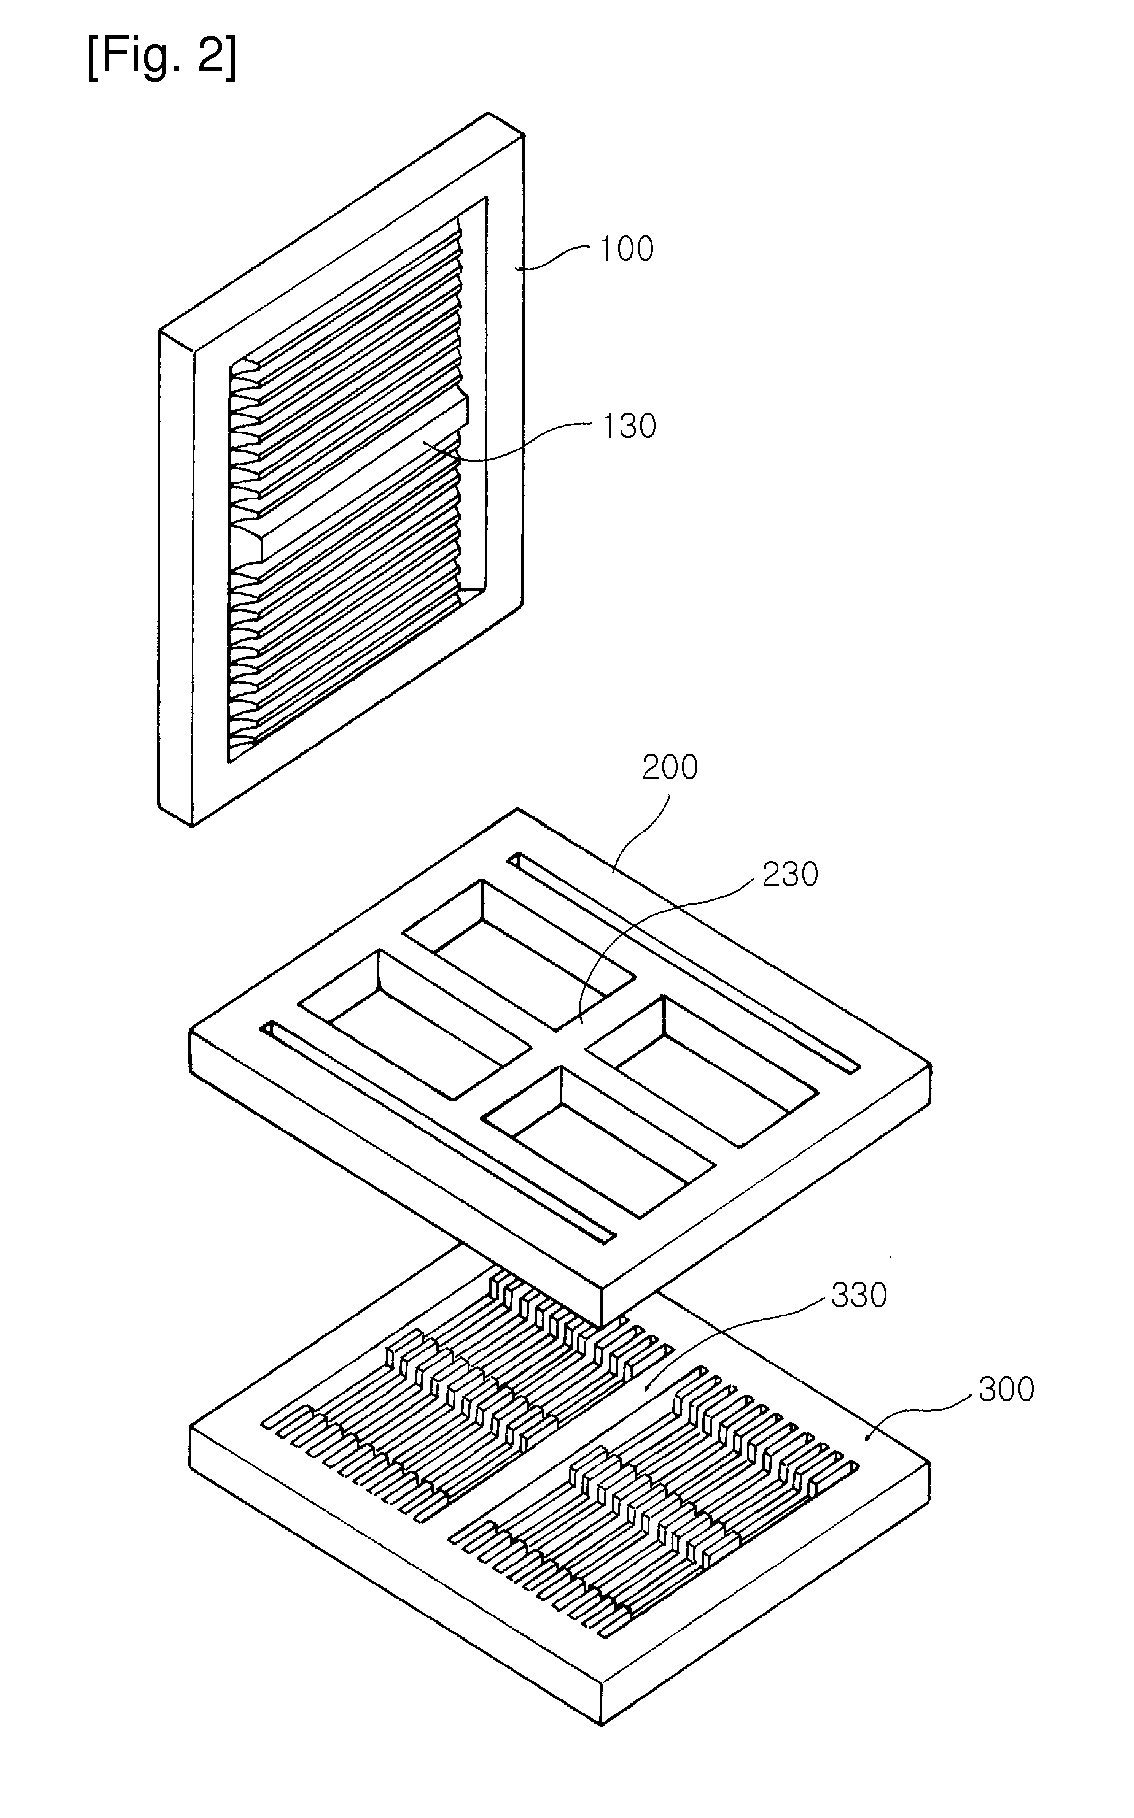 Flat plate type micro heat spreading device